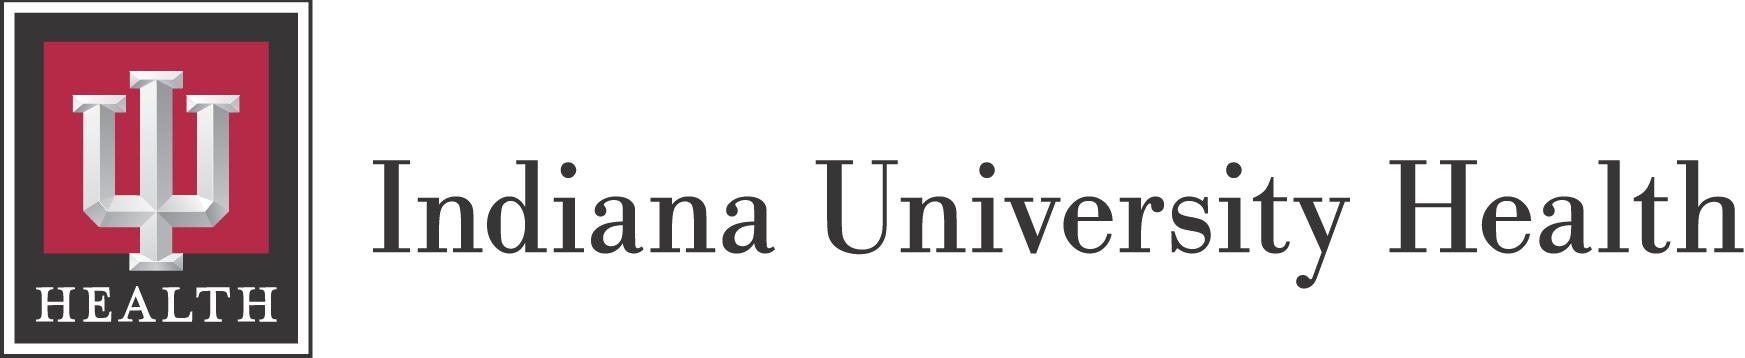 IU University Health